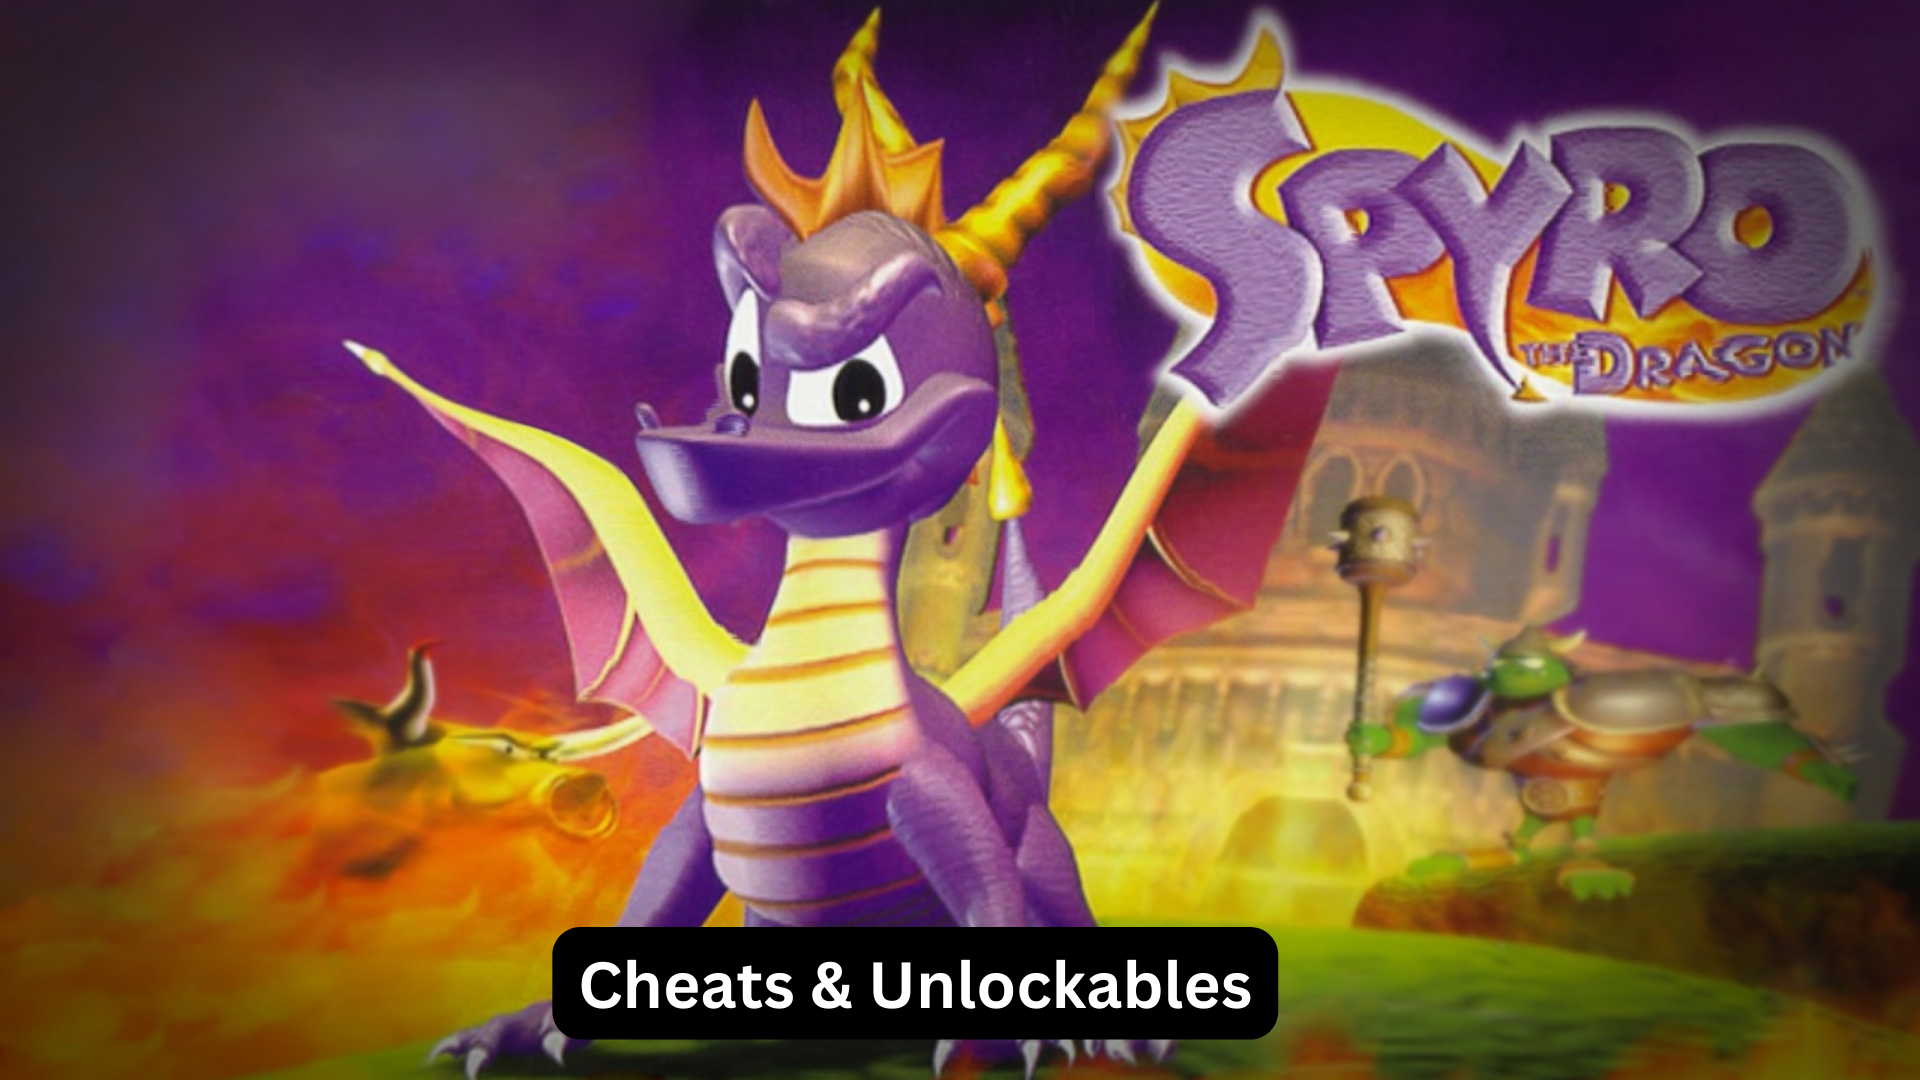 spyro the dragon cheats and unlockables